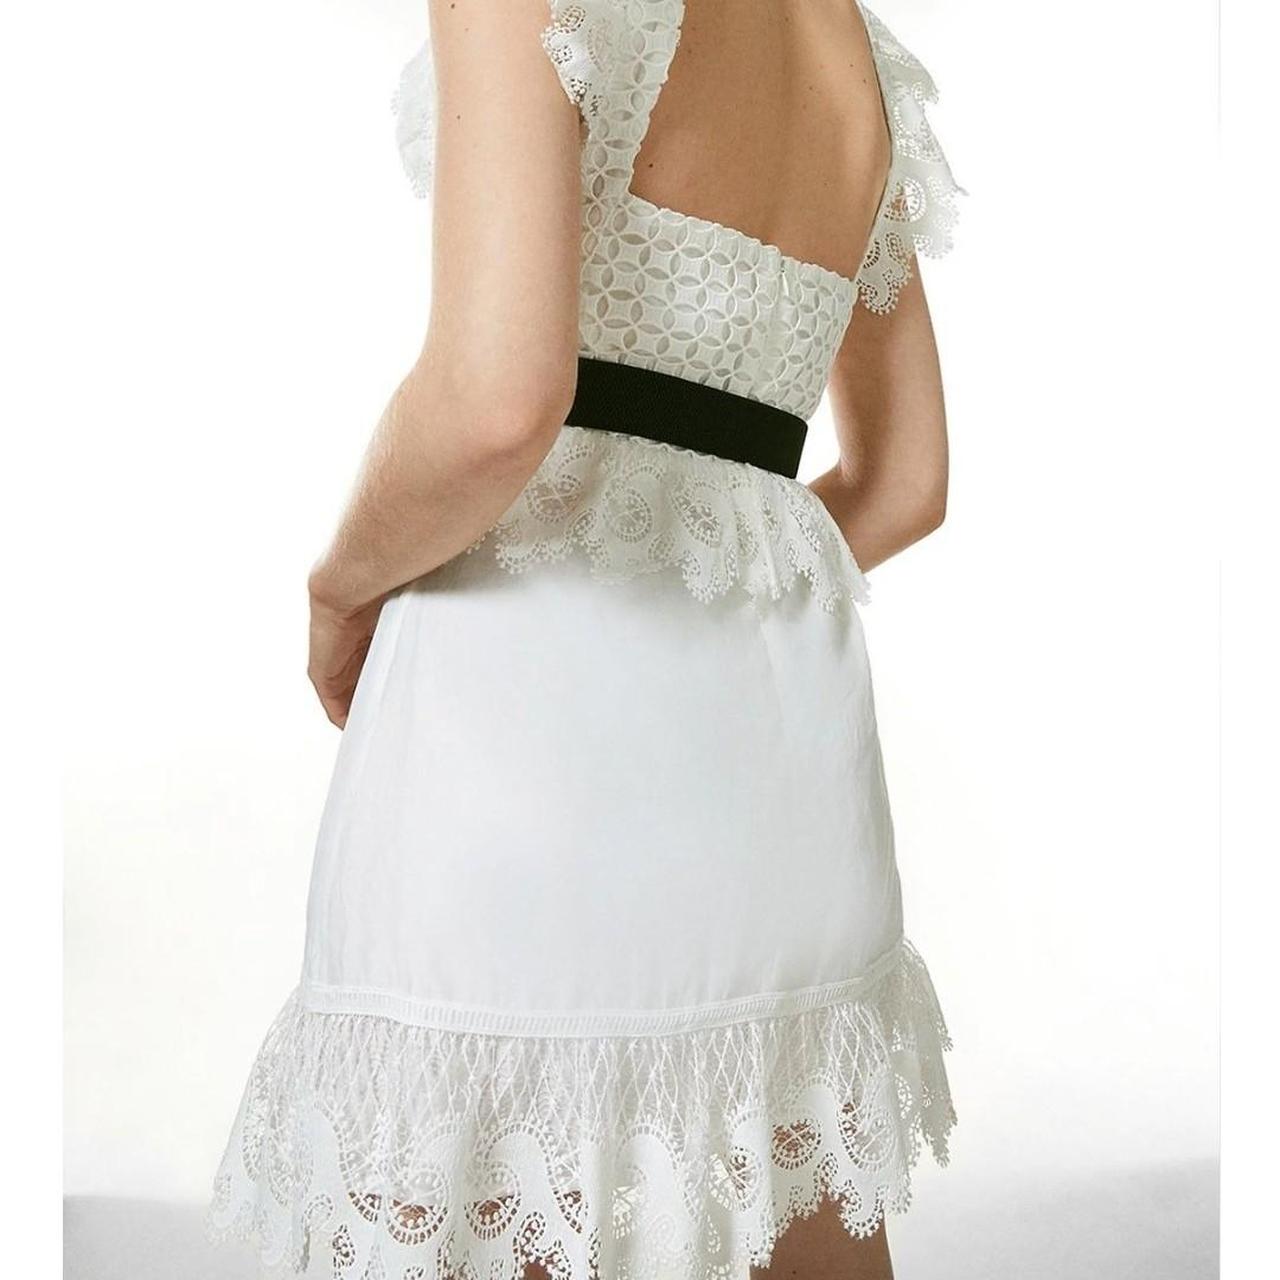 Karen Millen Women's White and Black Dress (4)